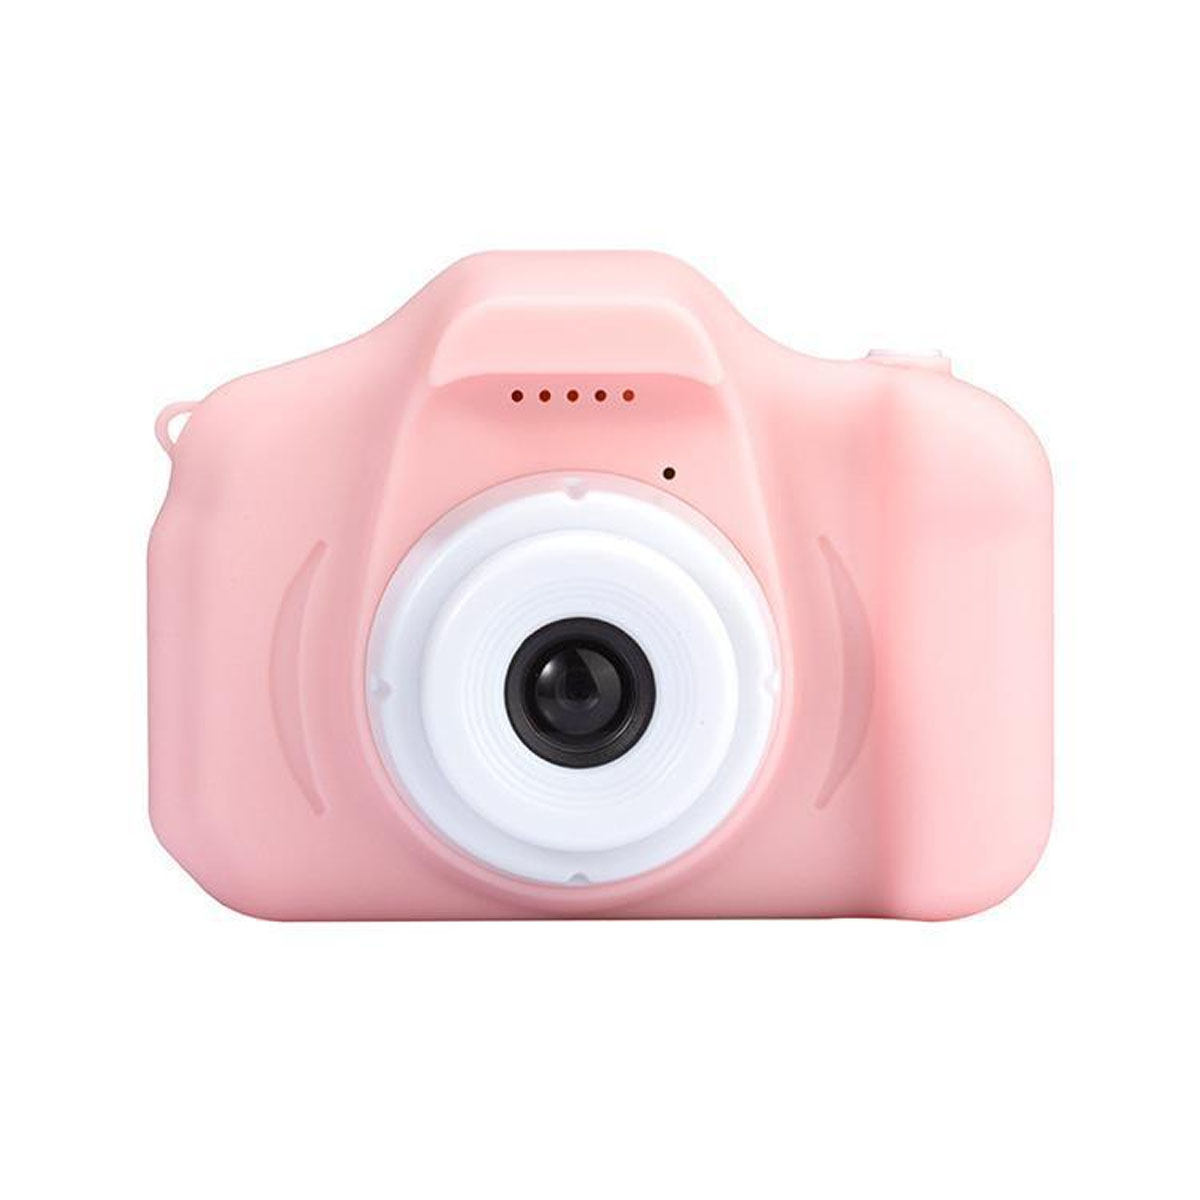 Kamera, Rosa Kompaktkameras, Spielzeug-Kamera Kinder DSLR-Kamera, KINSI Kinderkamera LCD Kreative